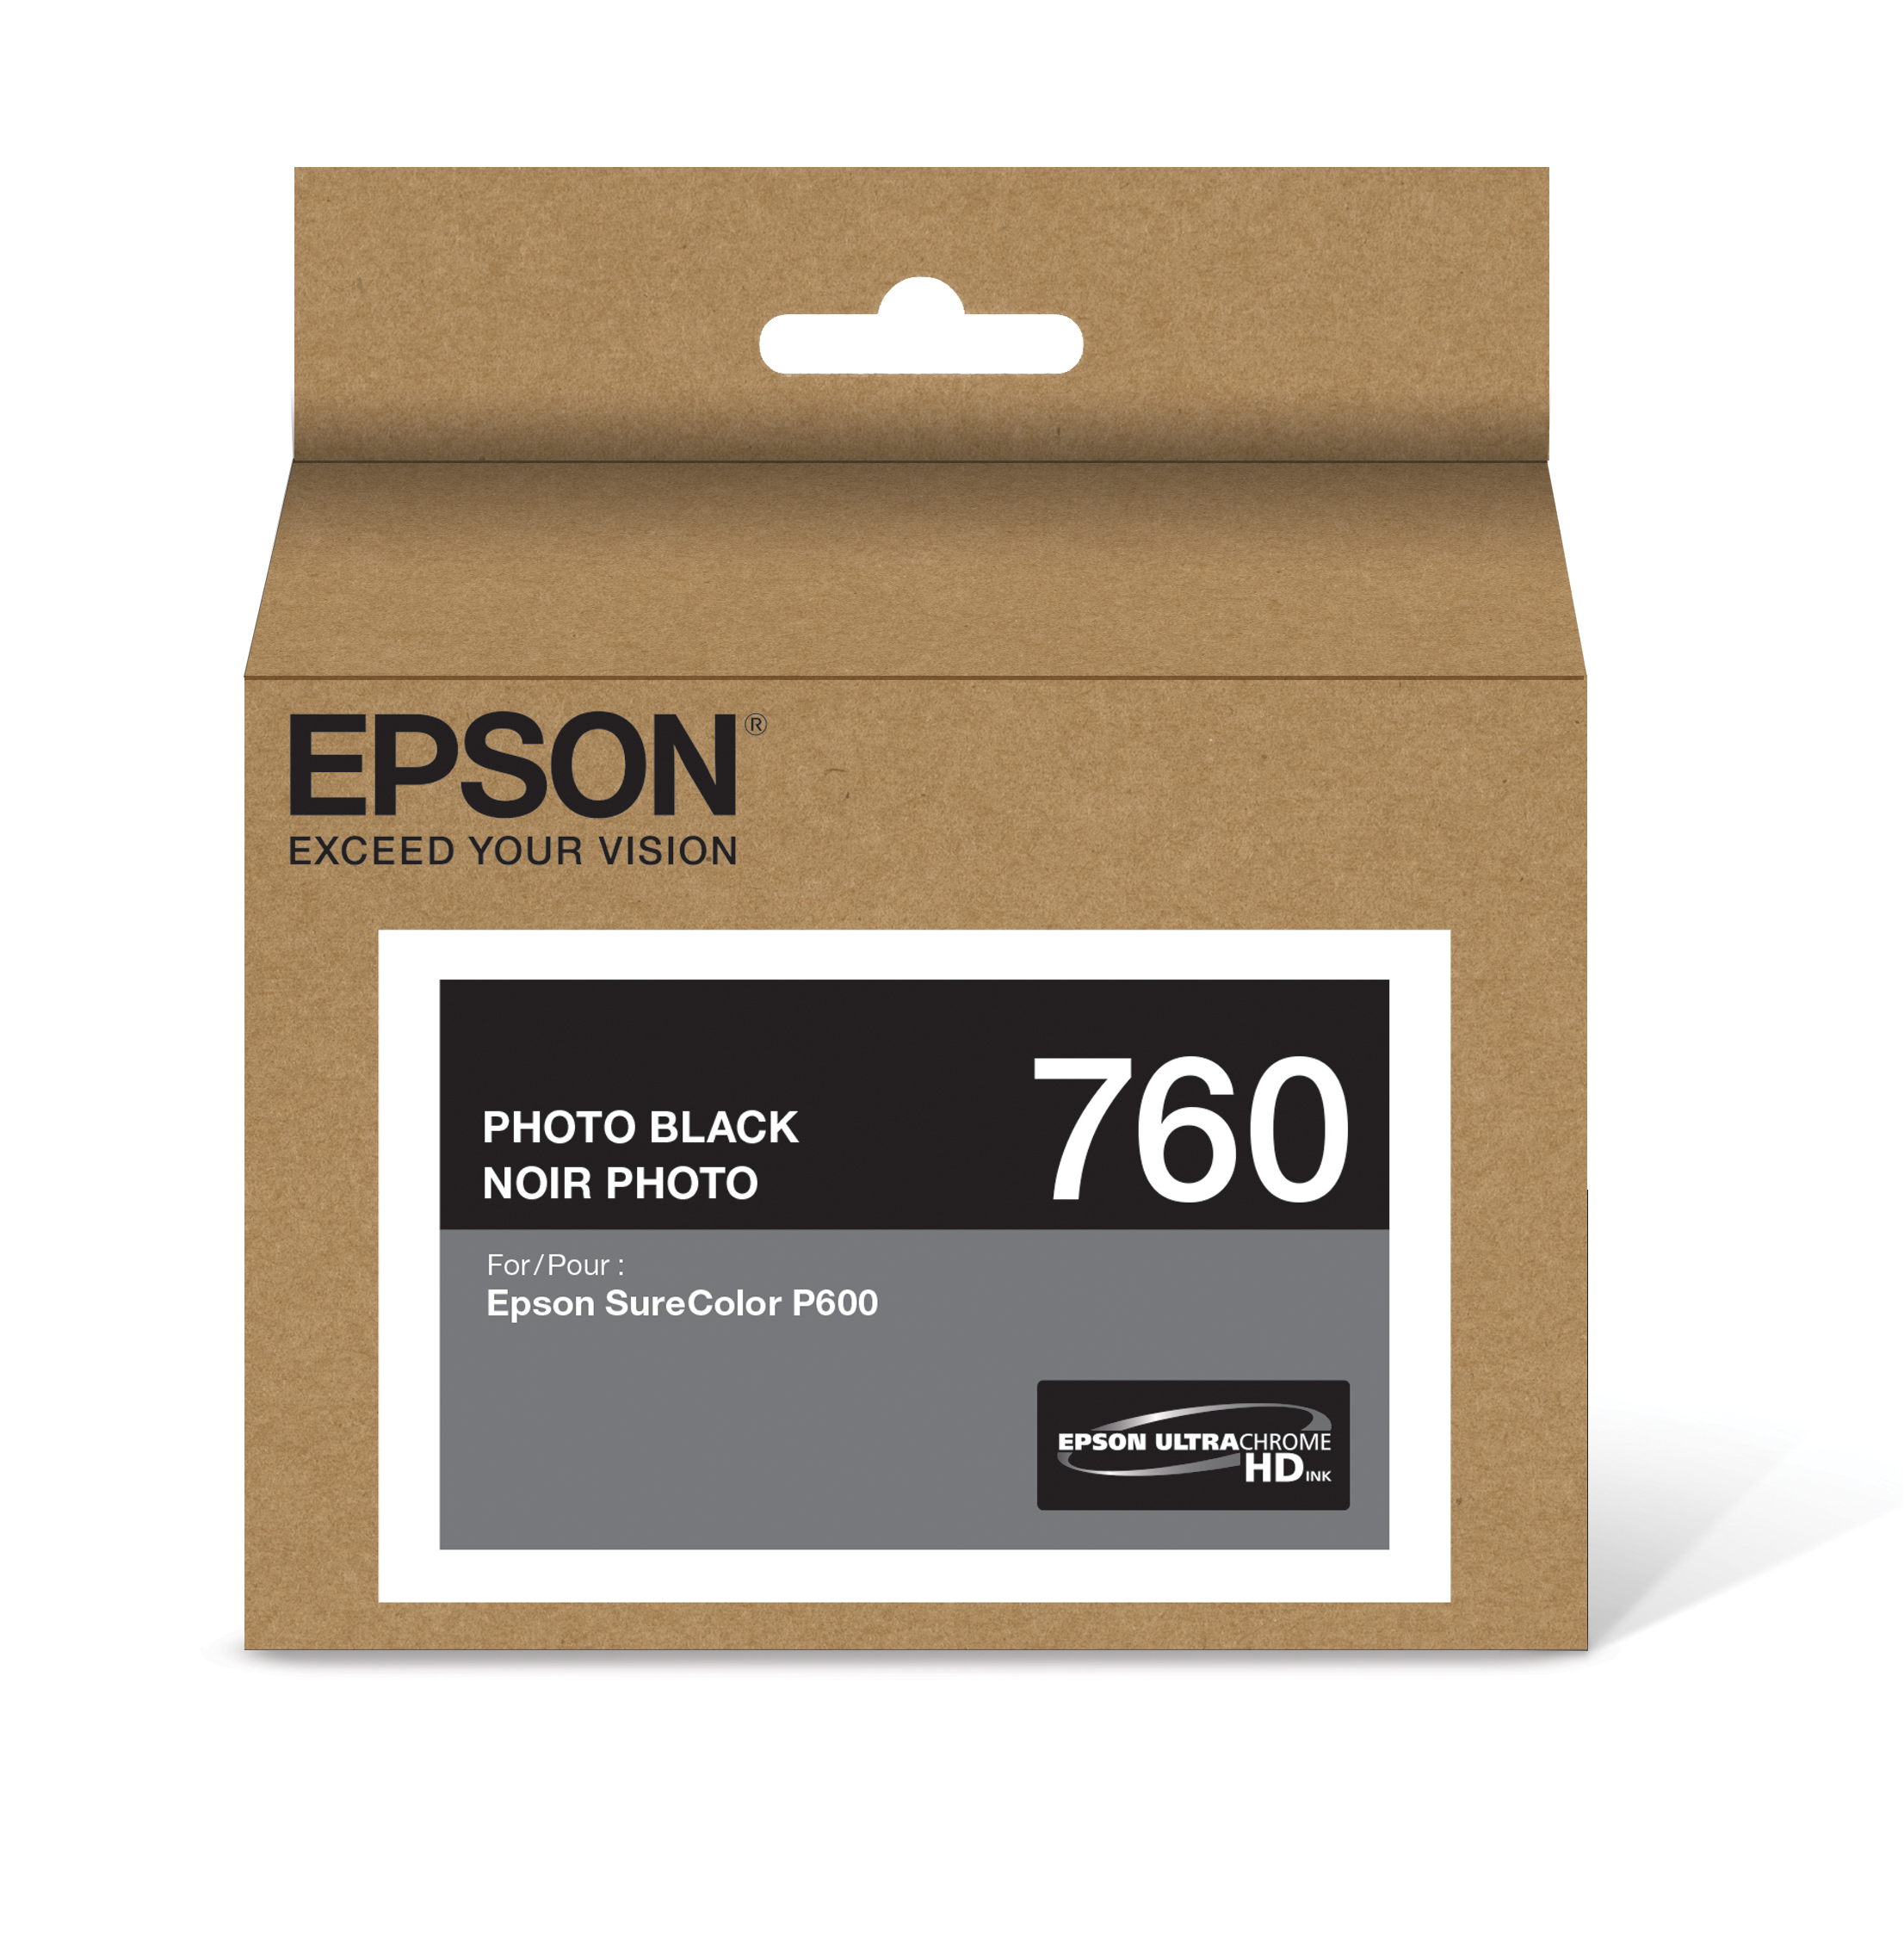 Epson SureColor P600 Inks